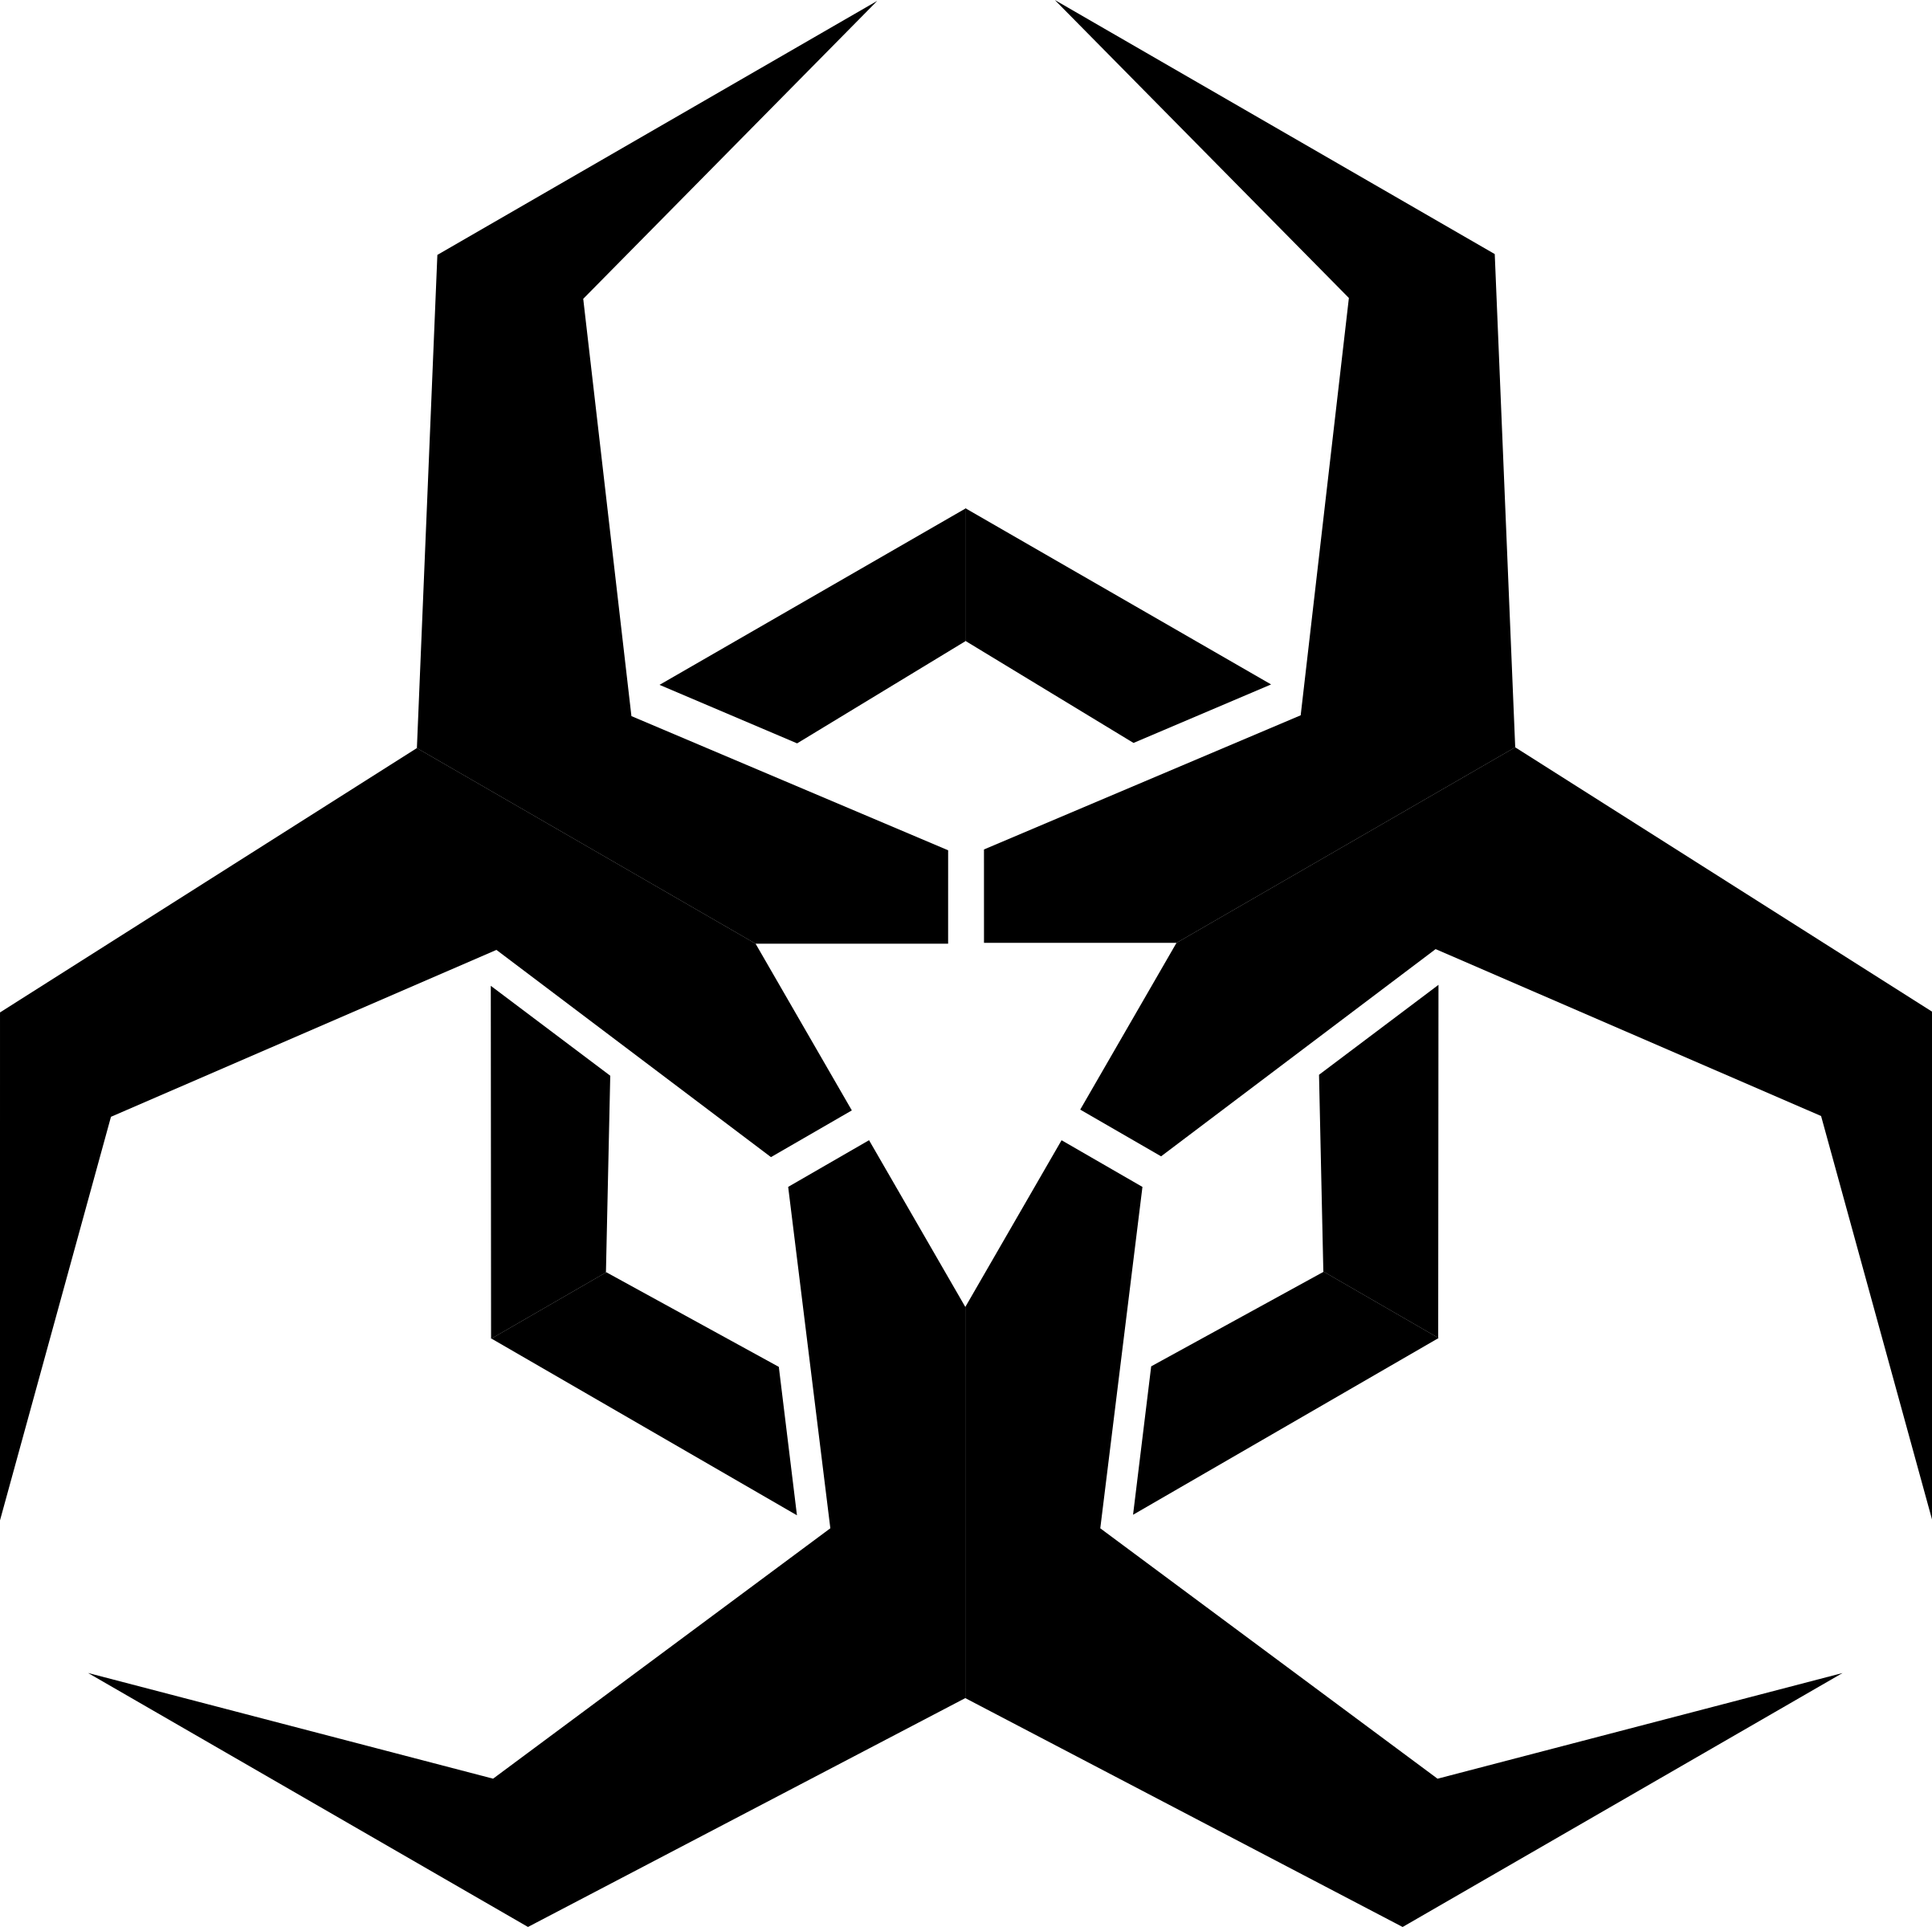 Cool Biohazard Symbol Logo PNG Image Transparent